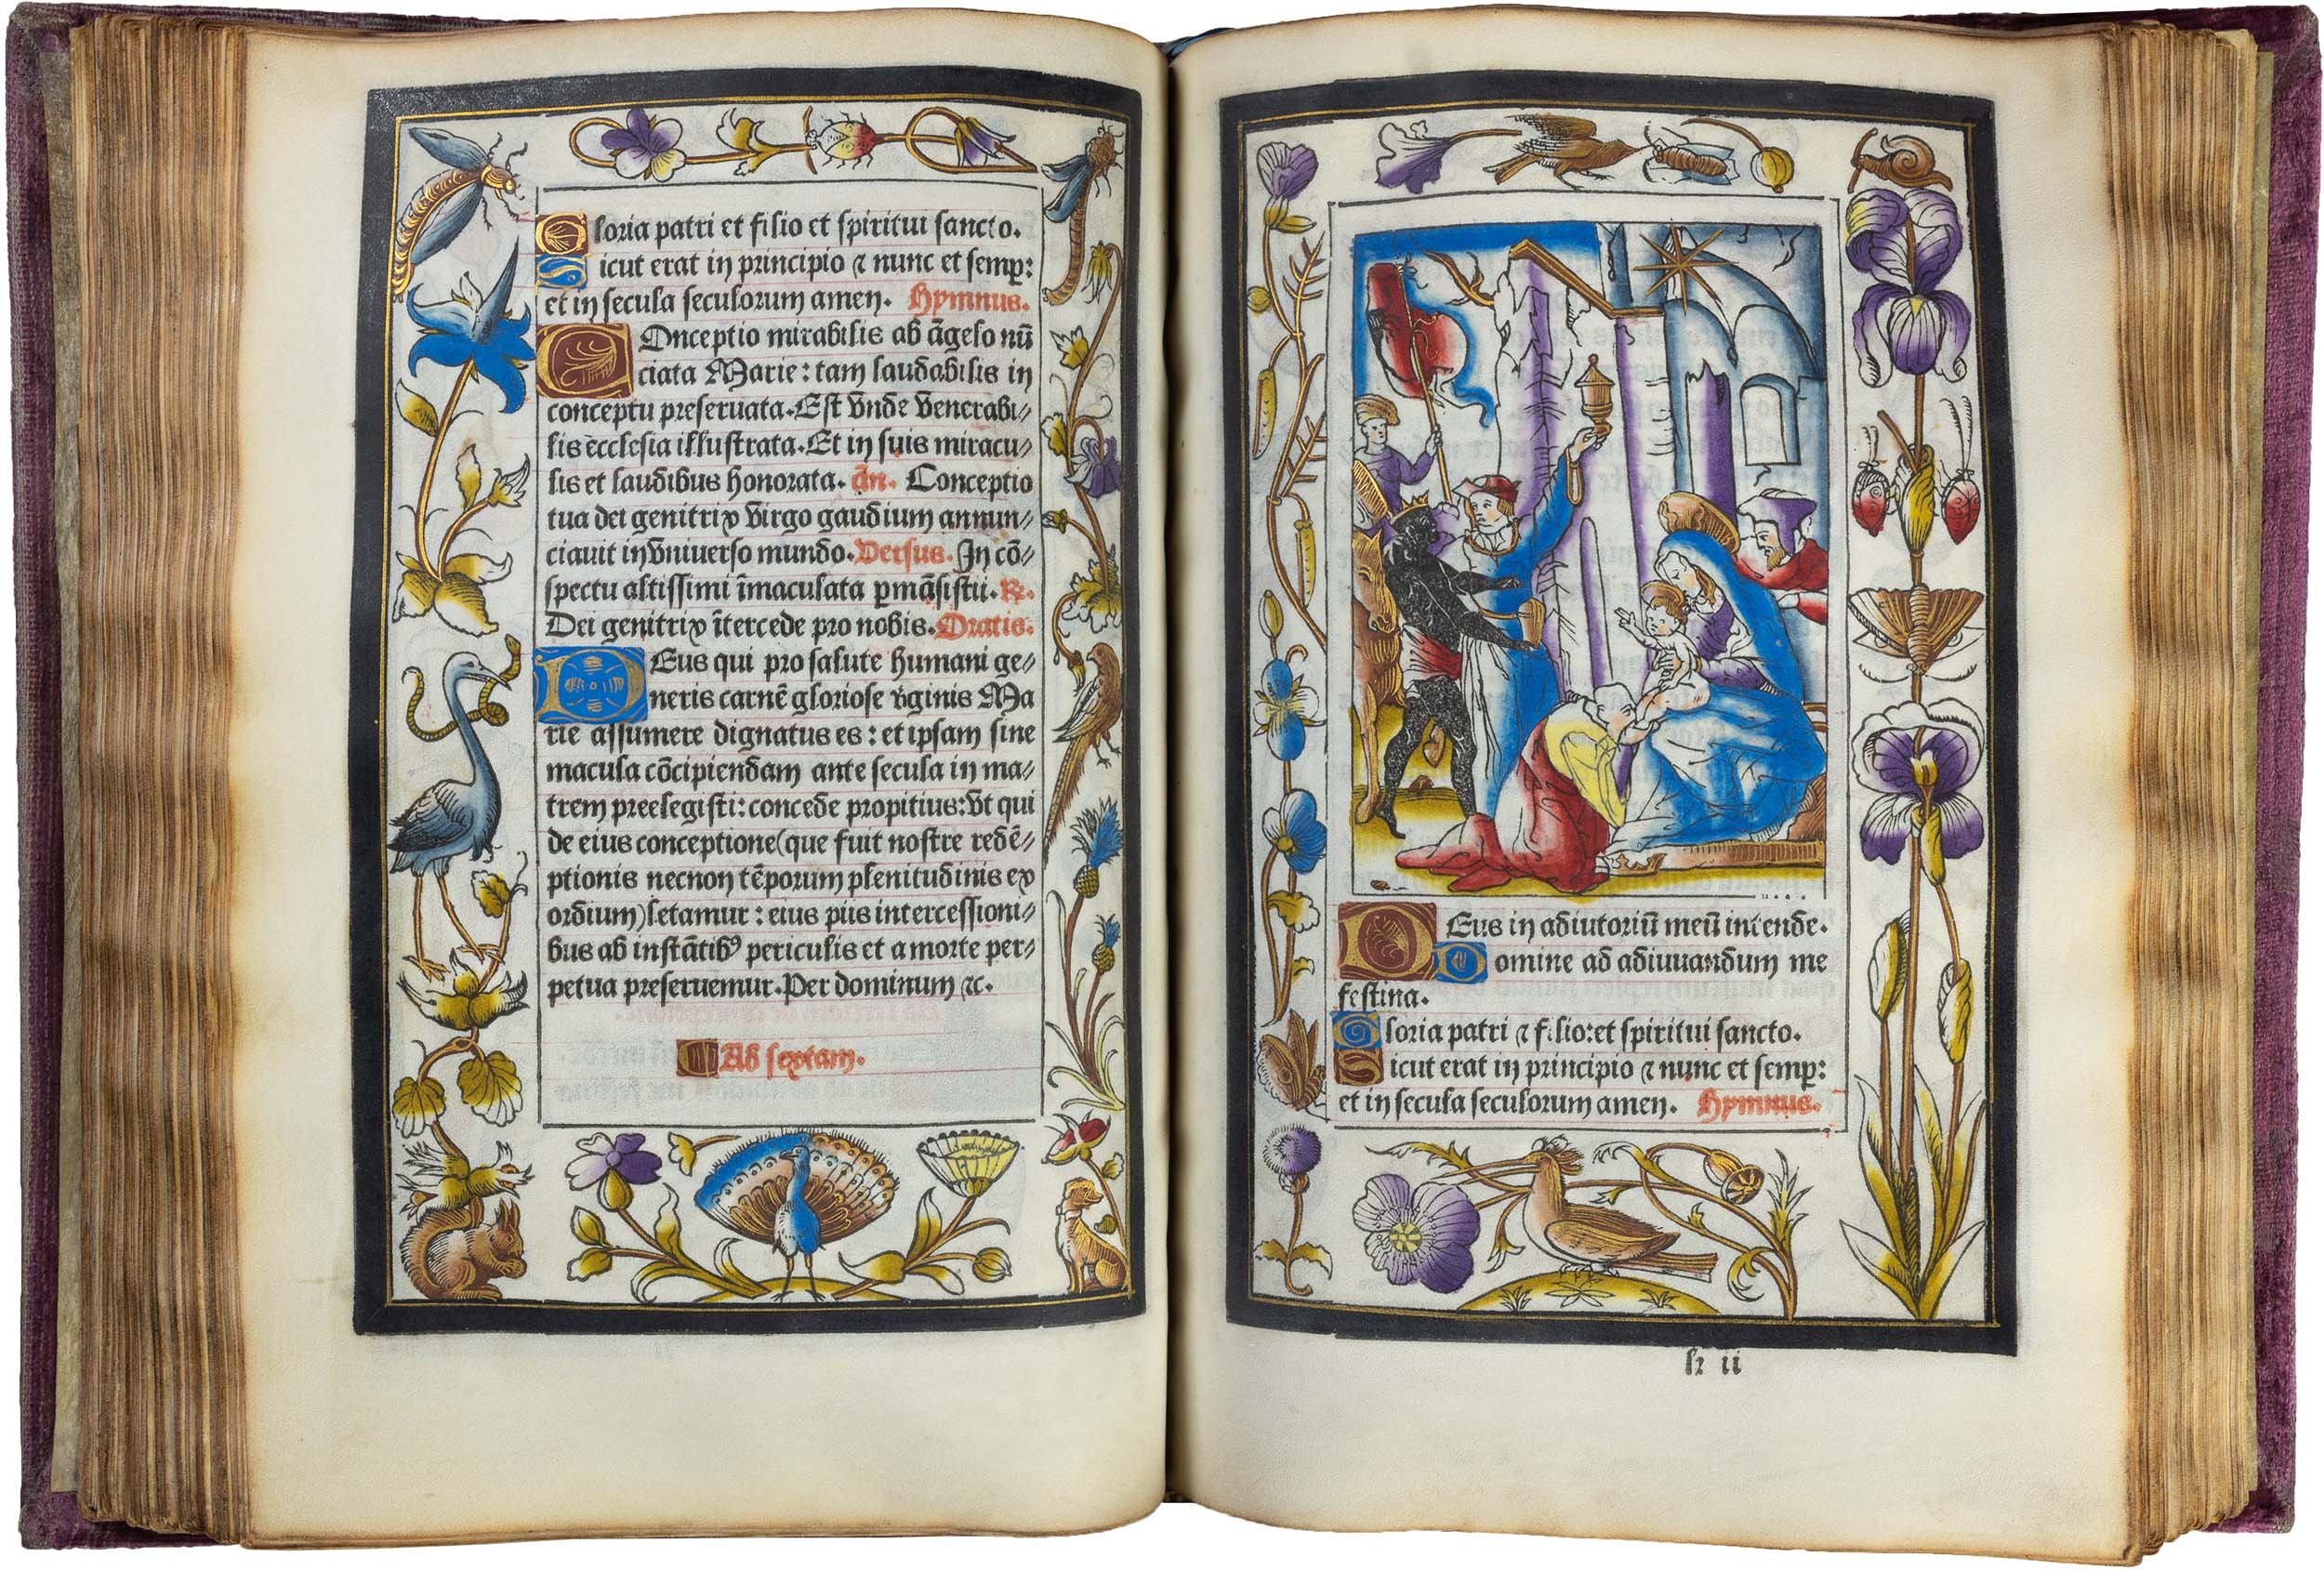 geoffroy-tory-printed-book-of-hours-illuminated-vellum-22-october-1527-prince-dessing-villeneuve-horae-bmv-76.jpg